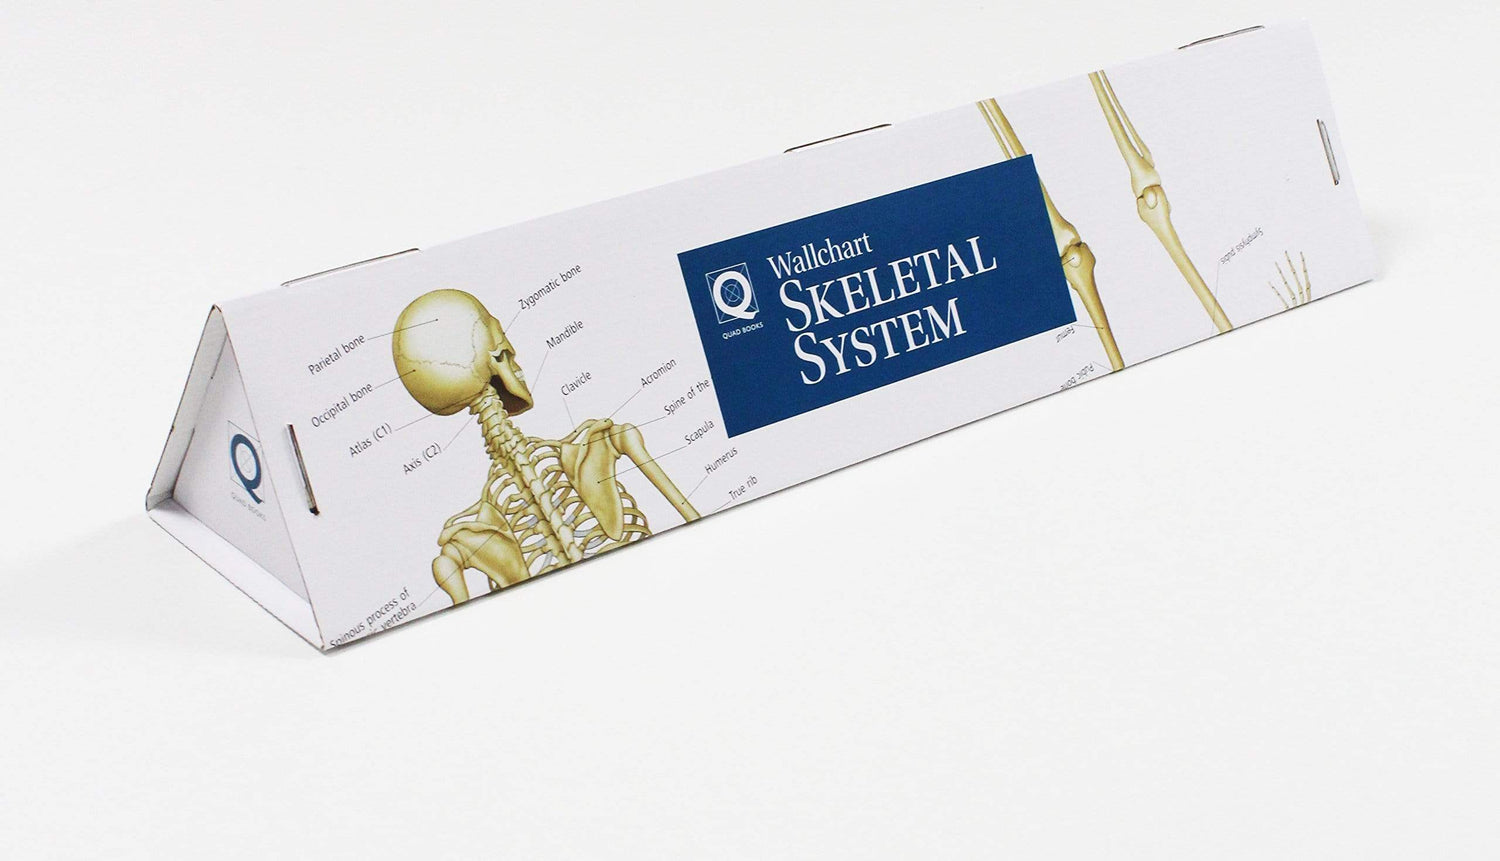 Human Anatomy Wallchart: The Skeletal System